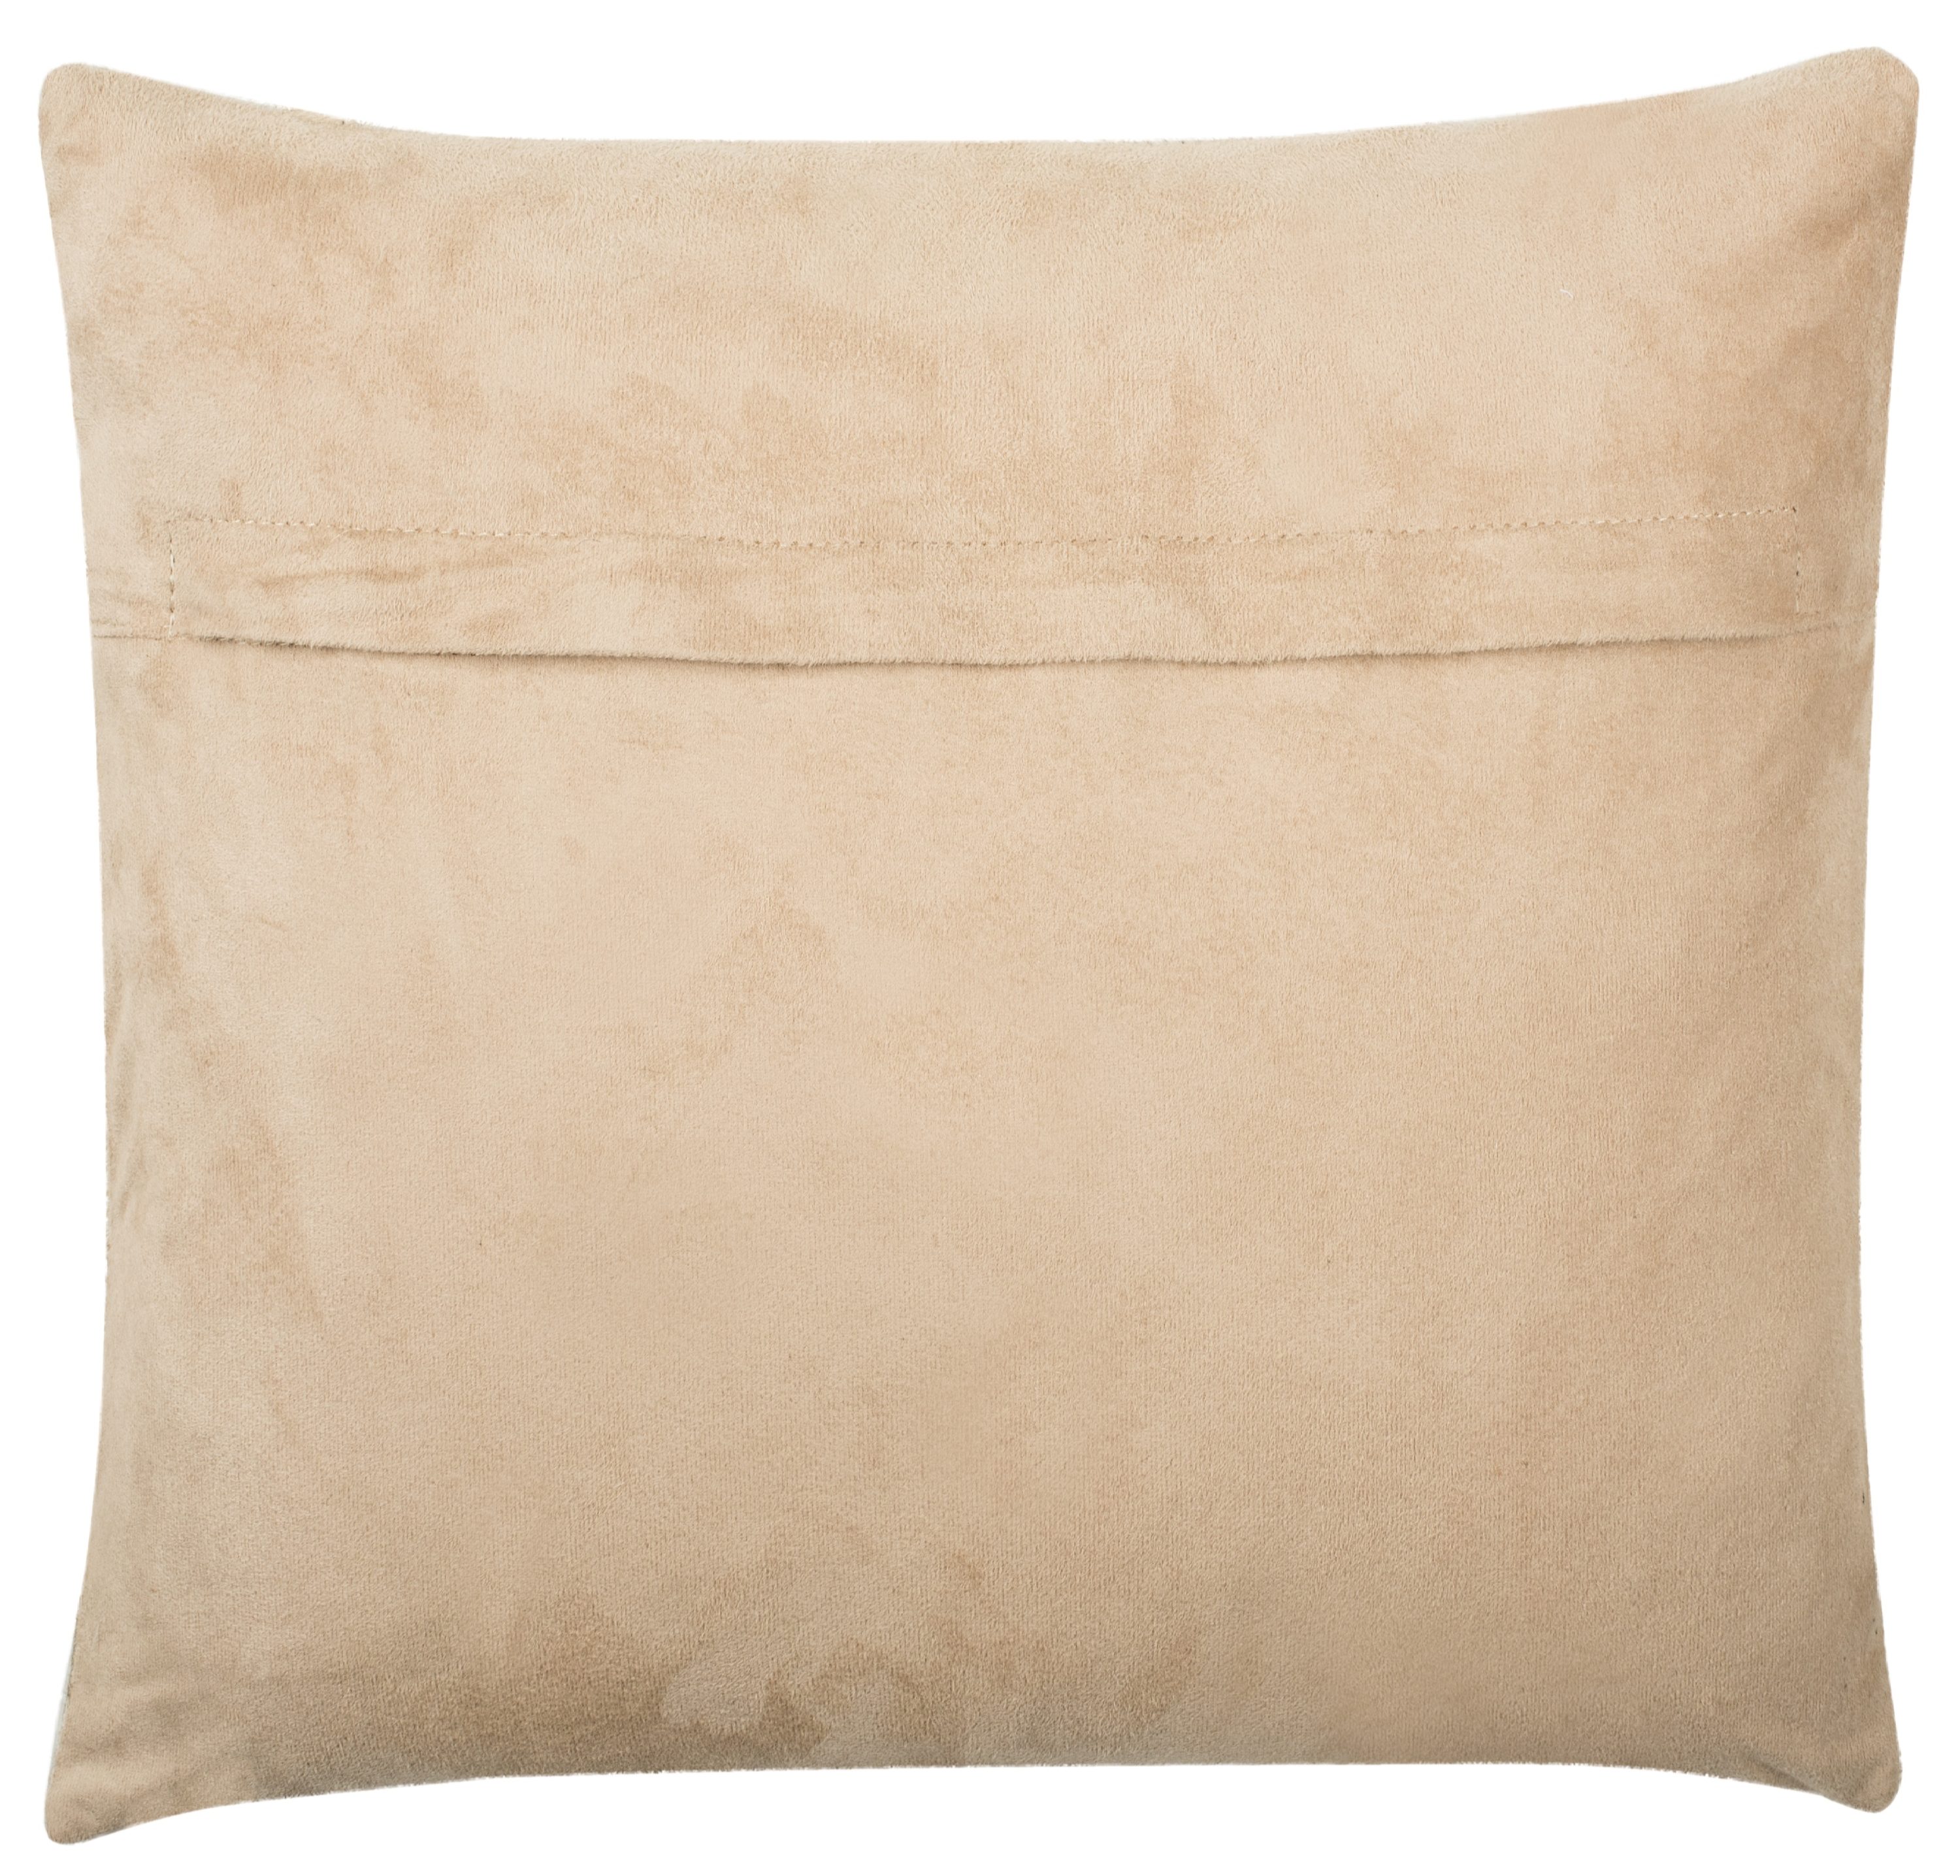 1'6 x 1'6 Safavieh Home Collection Aletha Boho 18-inch Peach Square Decorative Accent Pillow PLS9704A-1818 